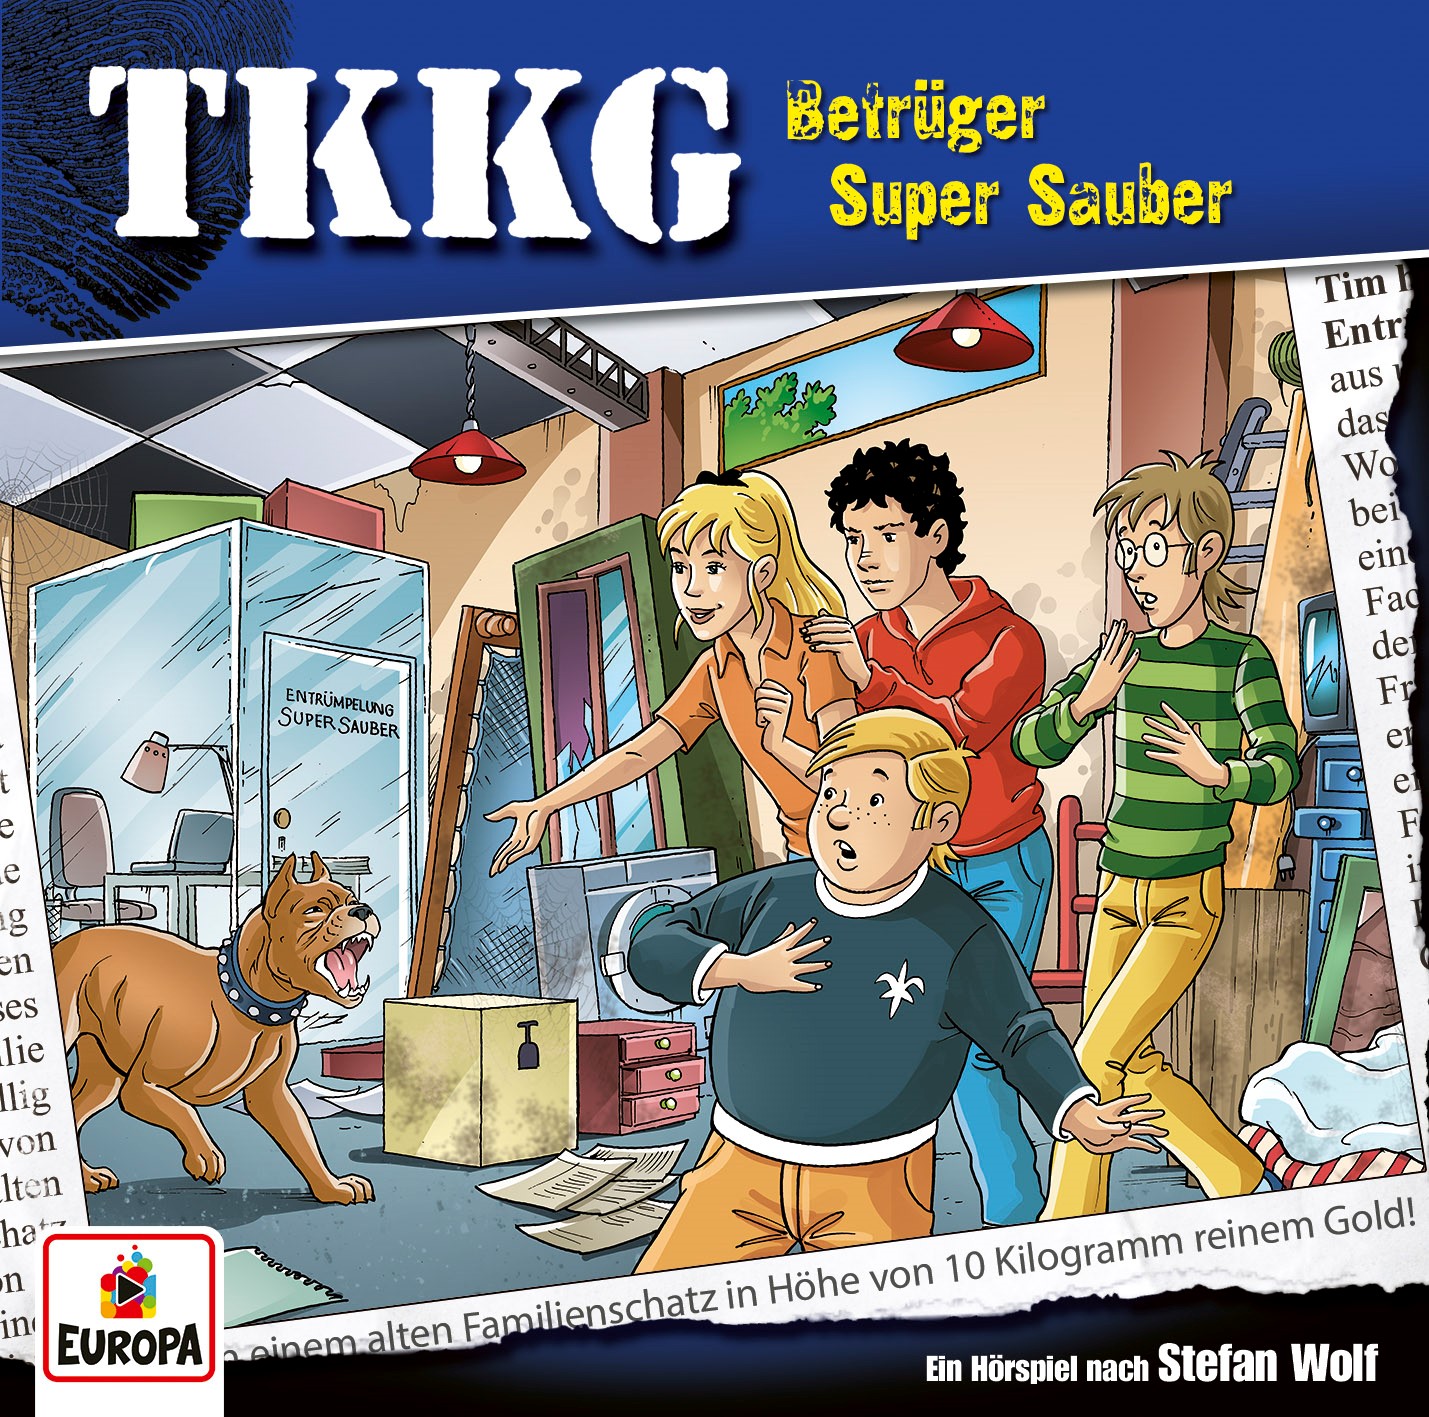 TKKG - Betrüger Super Sauber